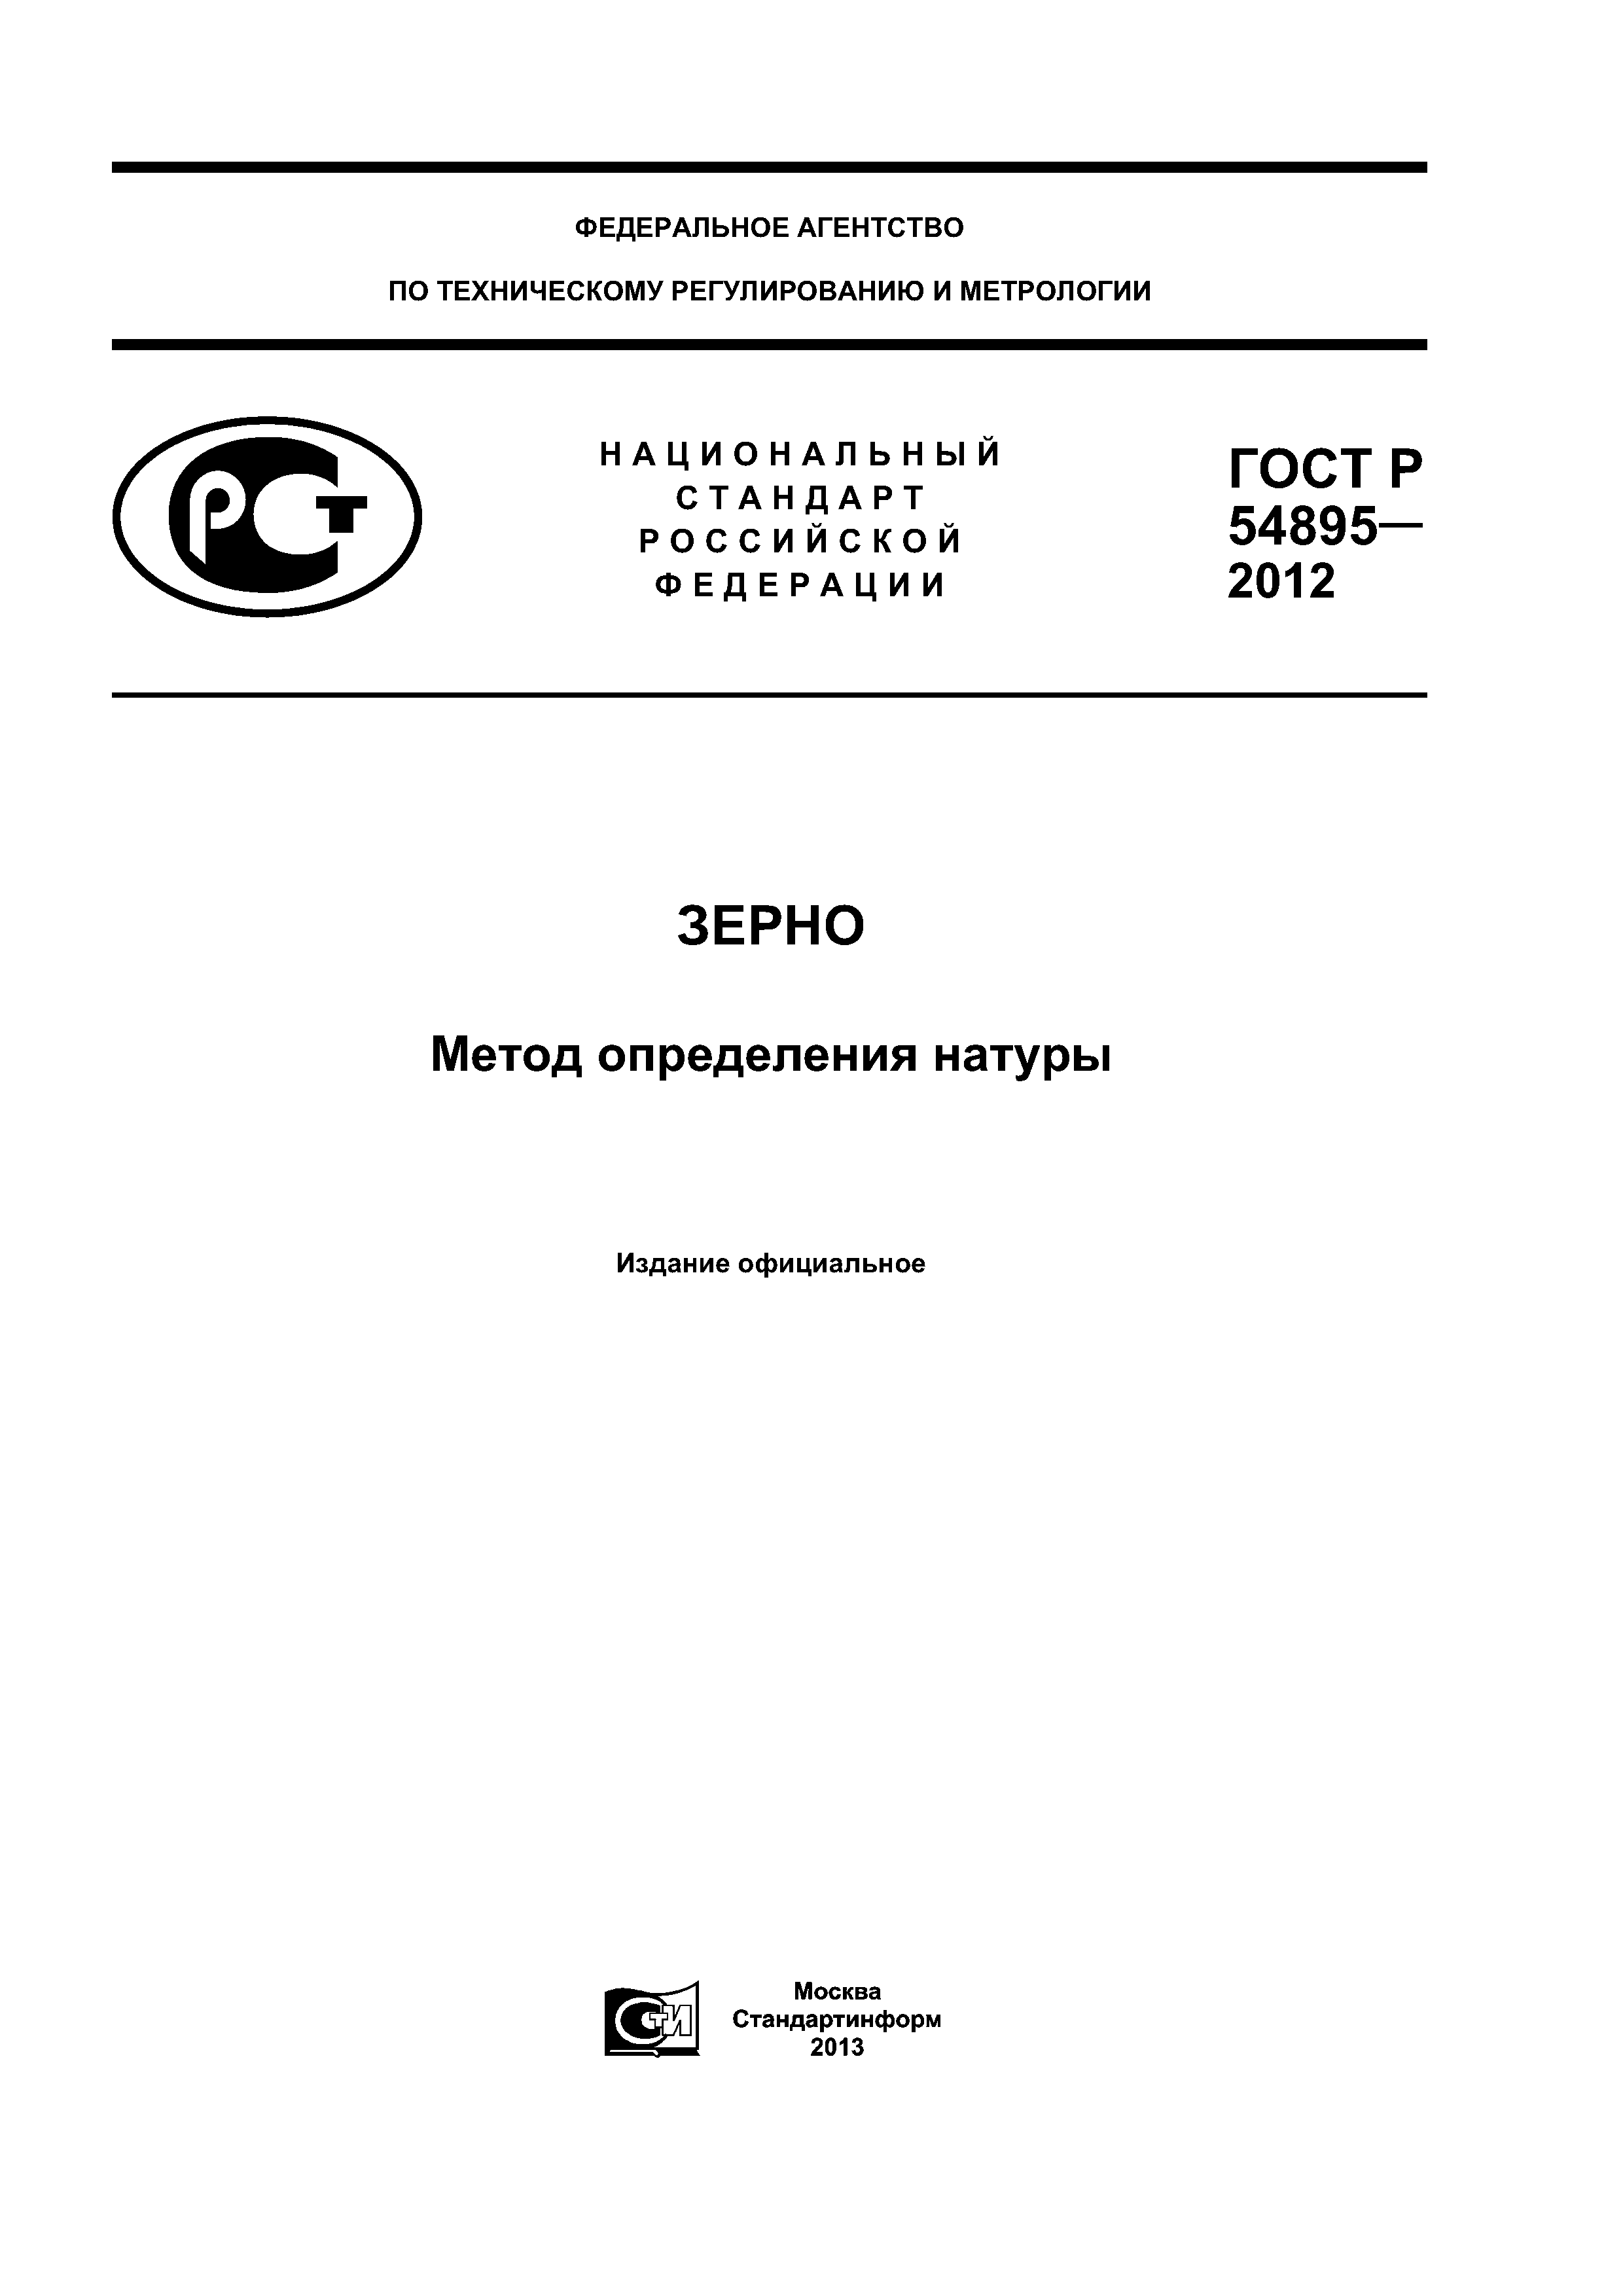 ГОСТ Р 54895-2012